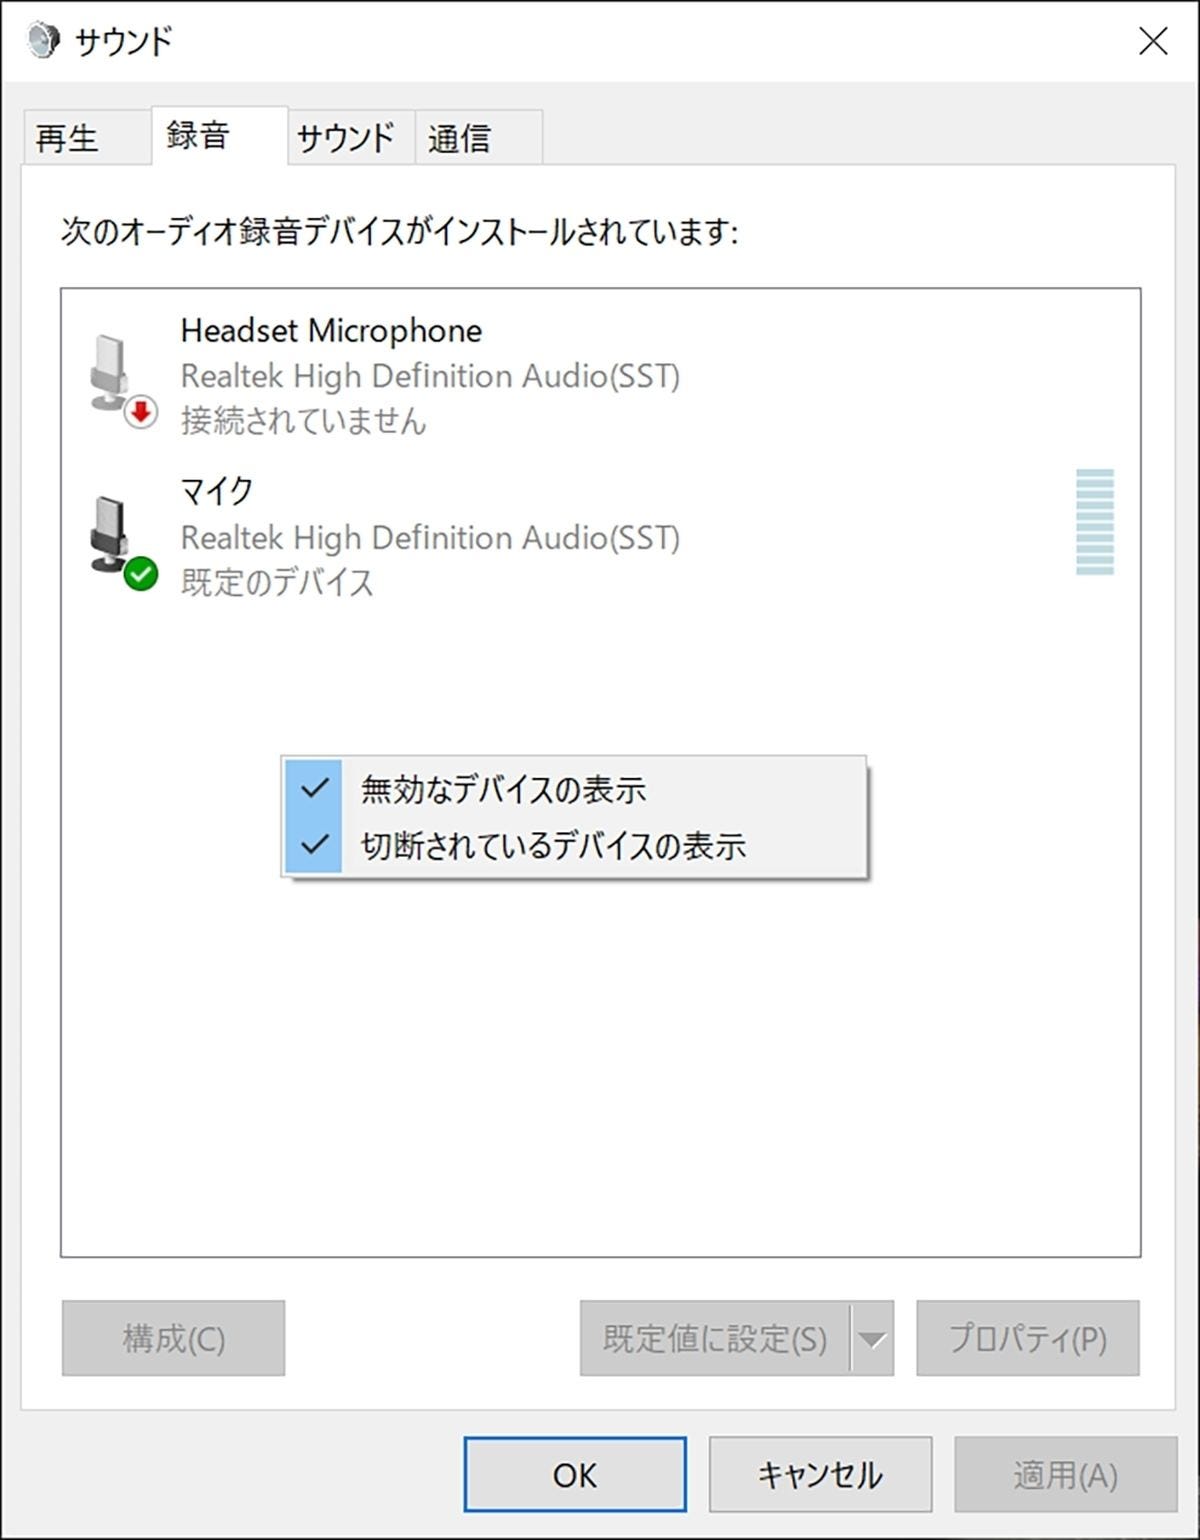 Windows 10ミニtips 557 無料でweb会議の映像 音声を録画する 仮想オーディオデバイス編 マイナビニュース